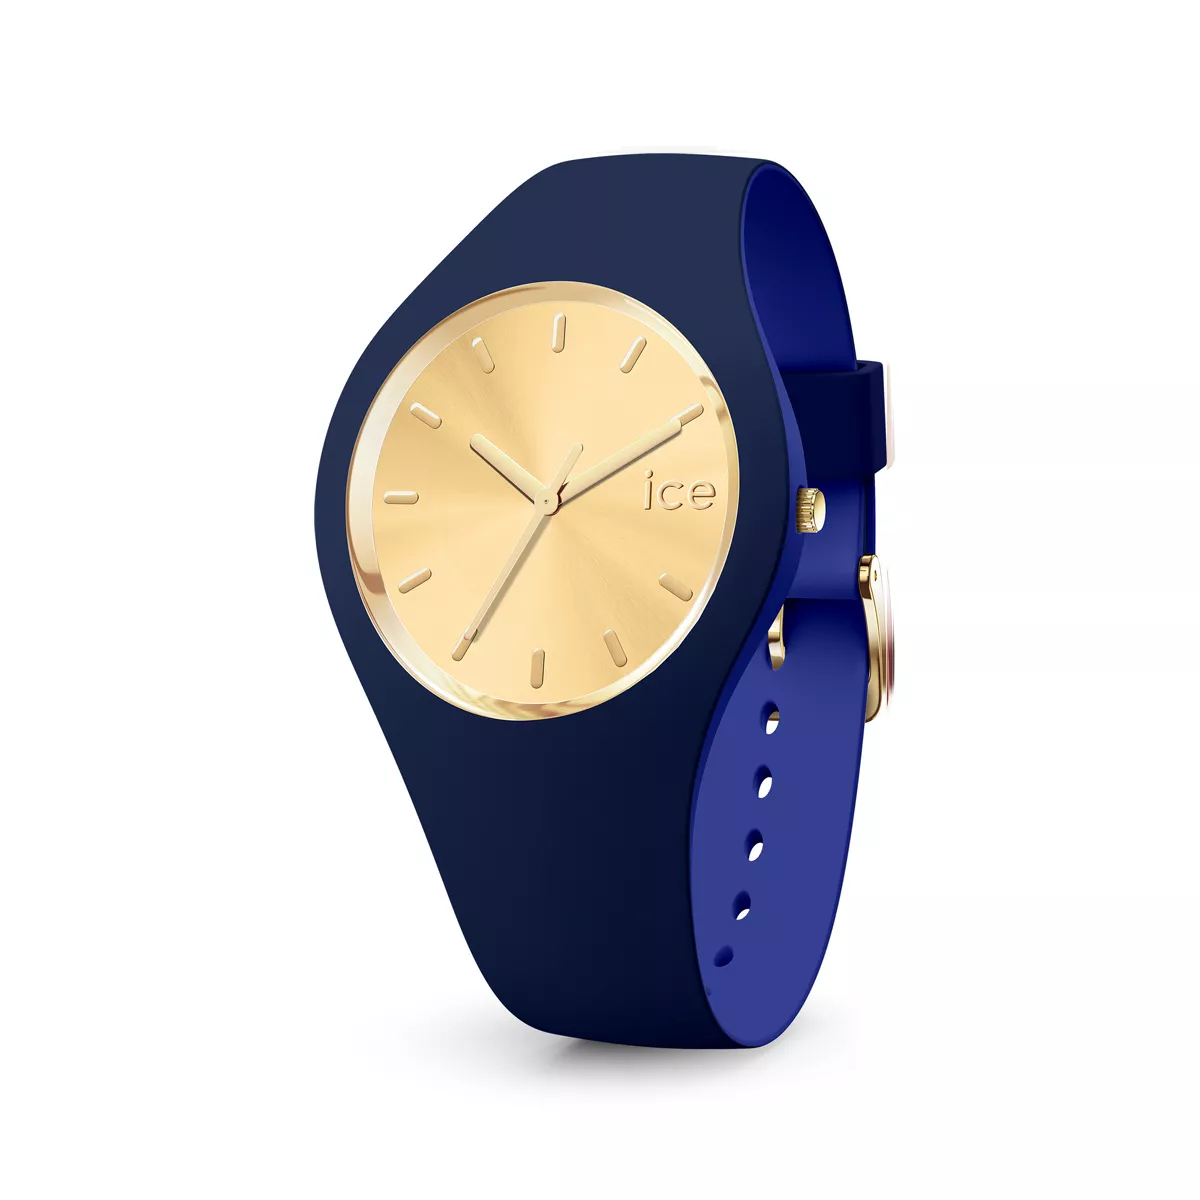 Ice-watch dameshorloge blauw 40mm IW016986